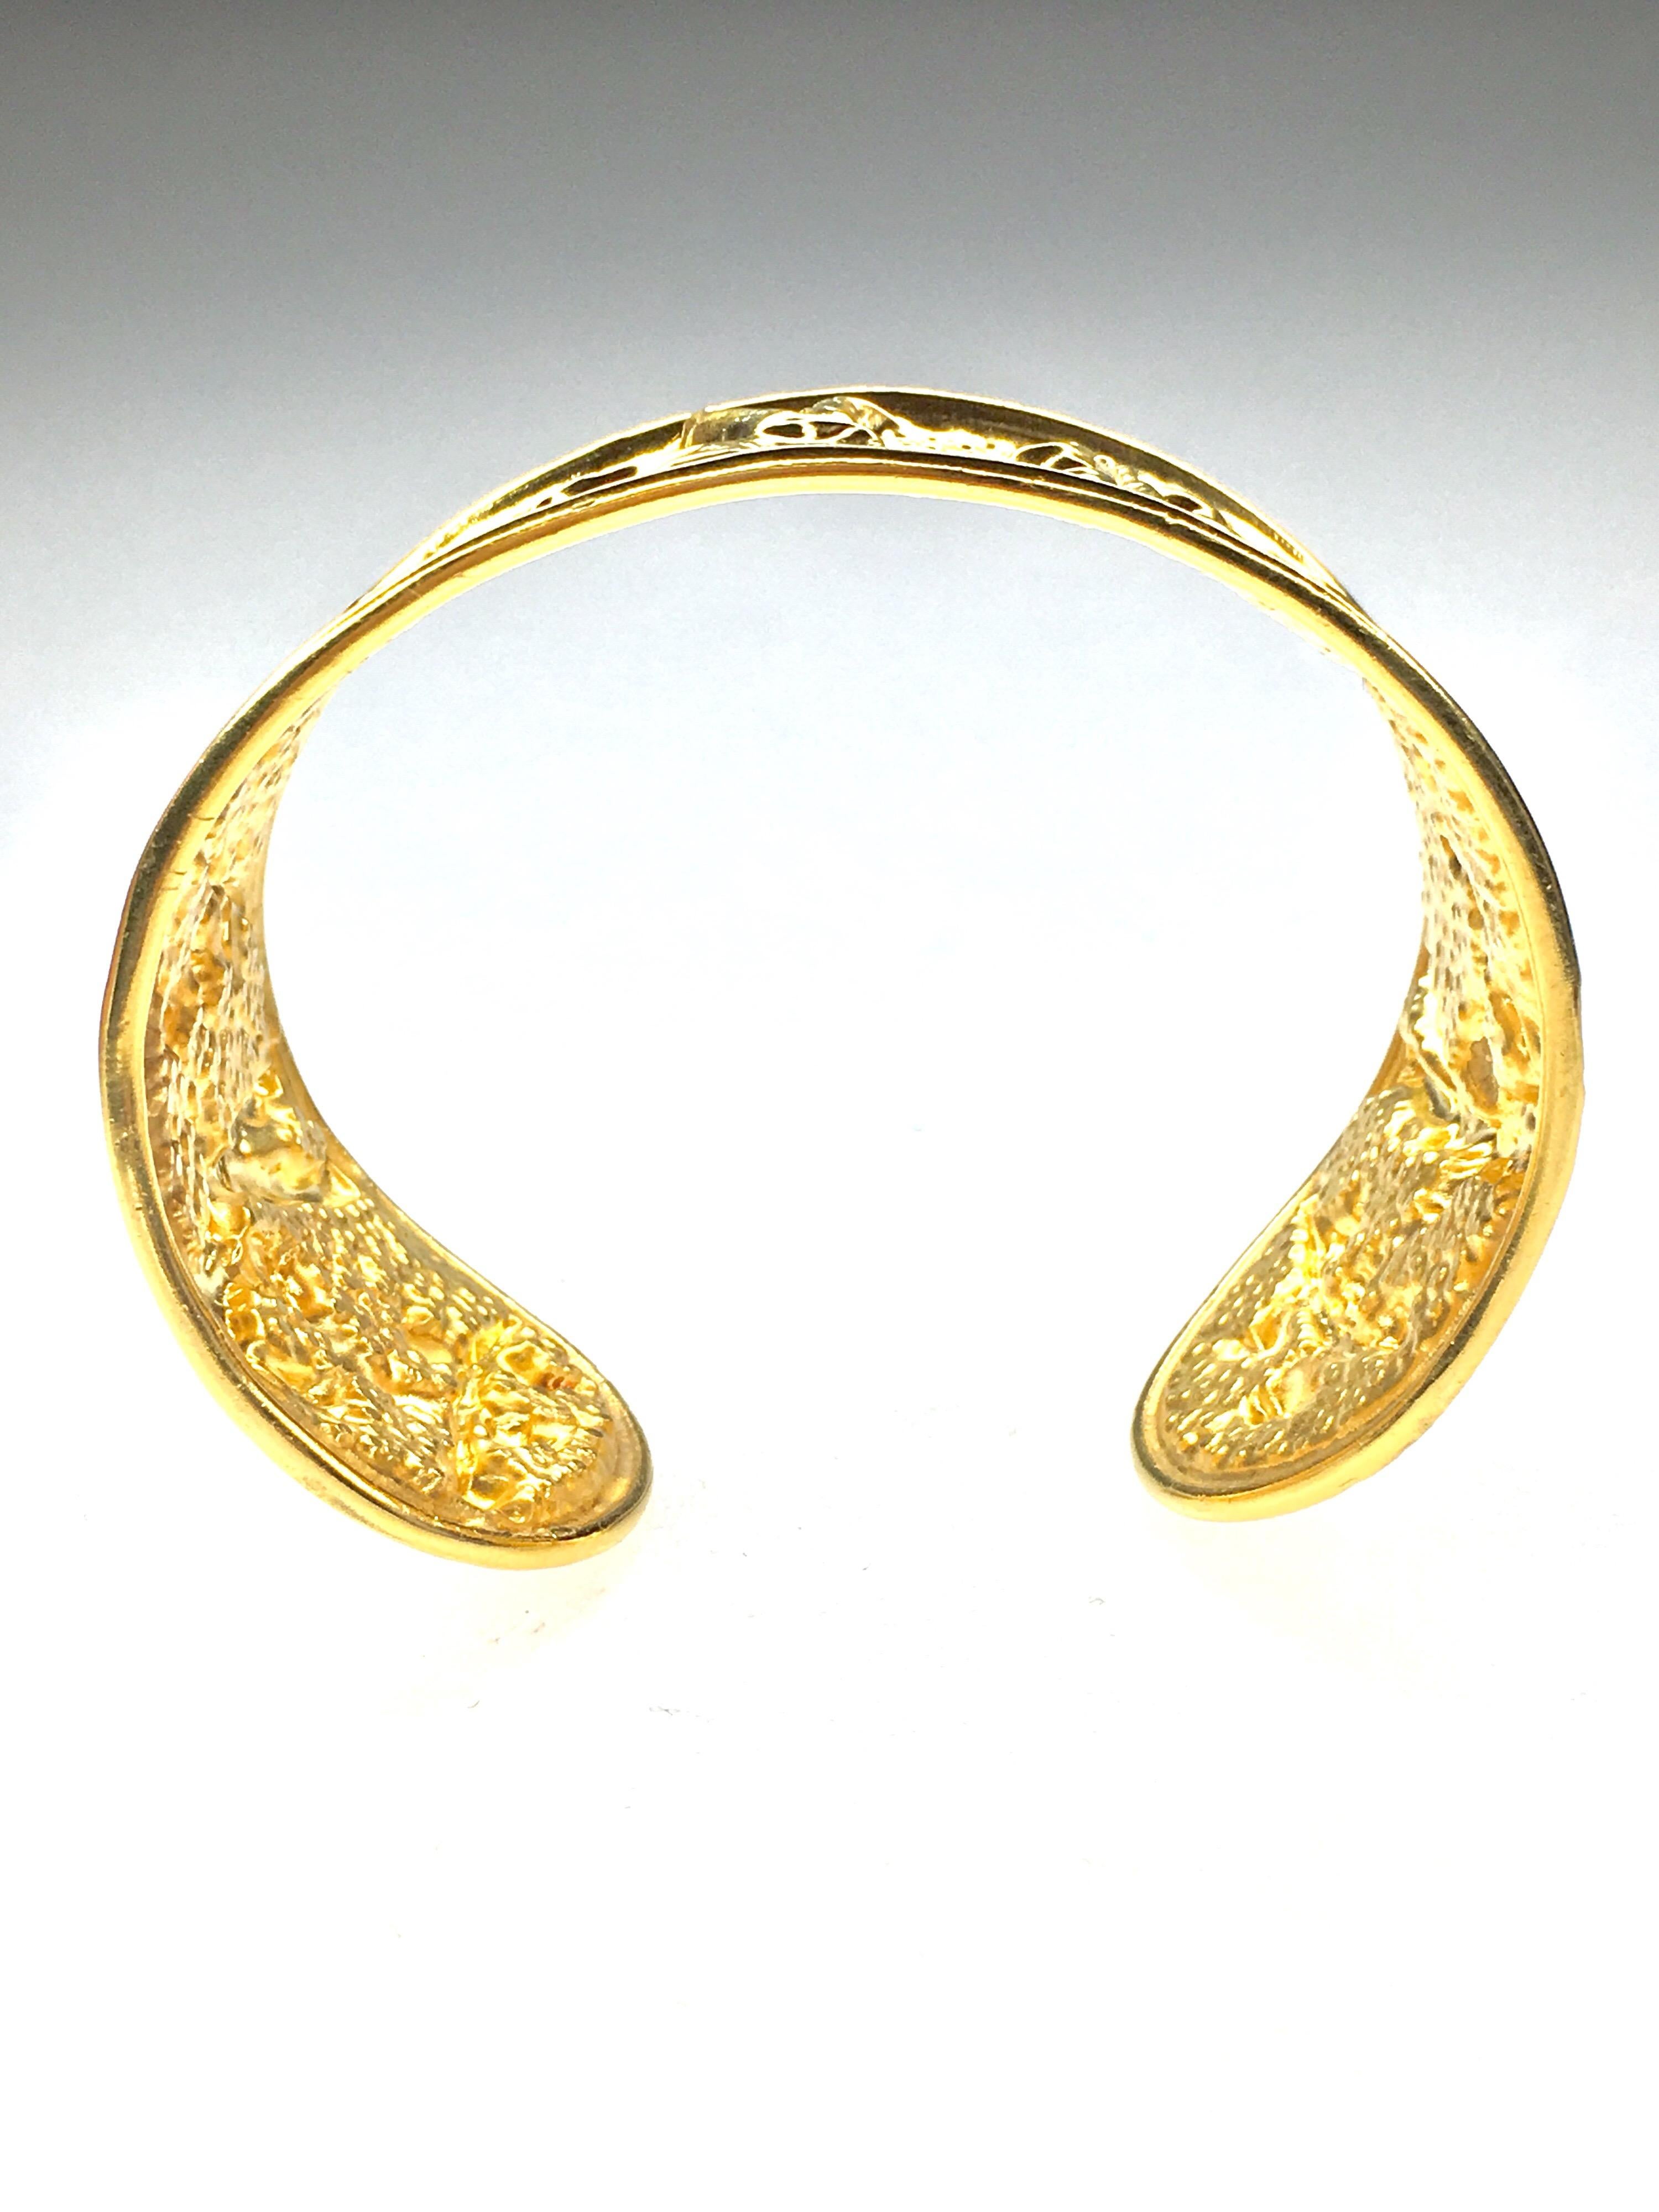 Greek Revival Gemolithos 22 Karat Yellow Gold The Prince of Knossos Cuff Bangle Bracelet